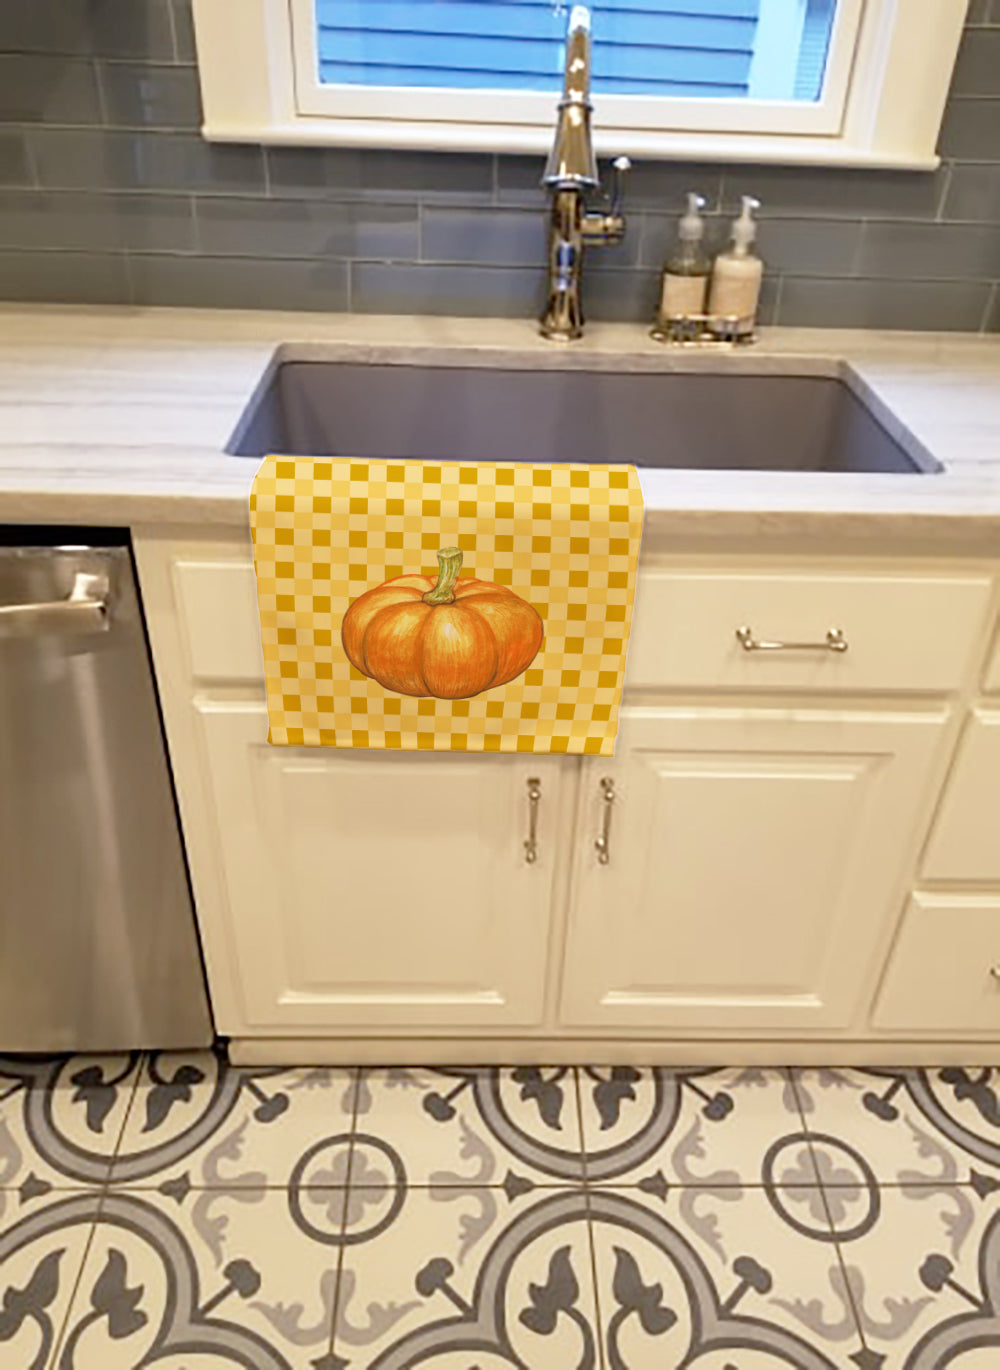 Pumpkin on Basketweave Kitchen Towel BB7209KTWL - the-store.com